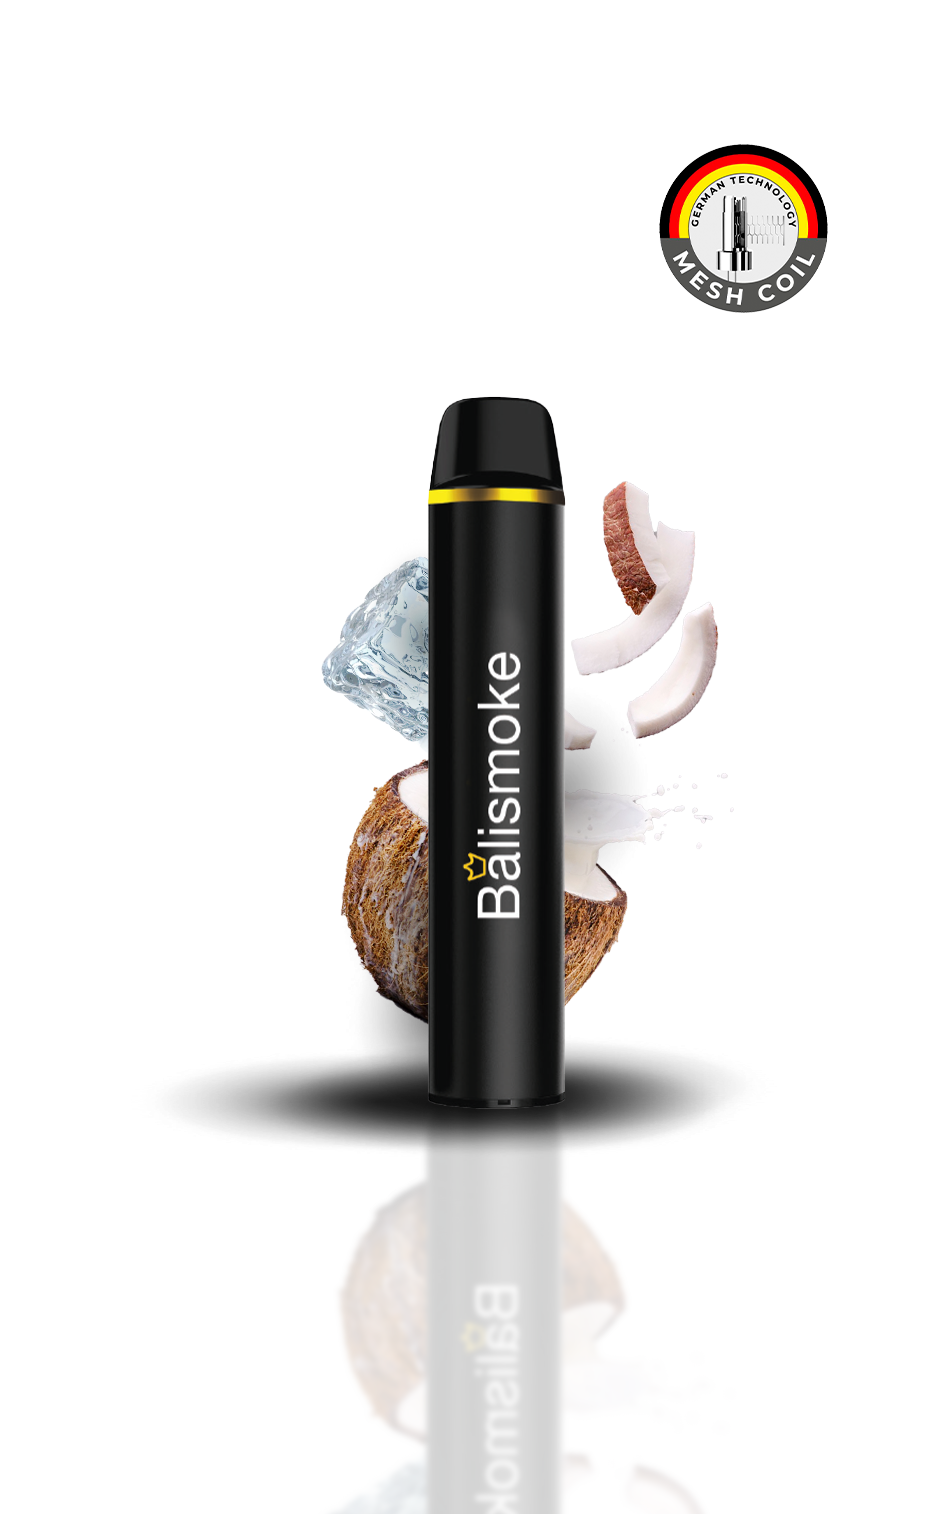 Balismoke - Disposable electronic cigarettes